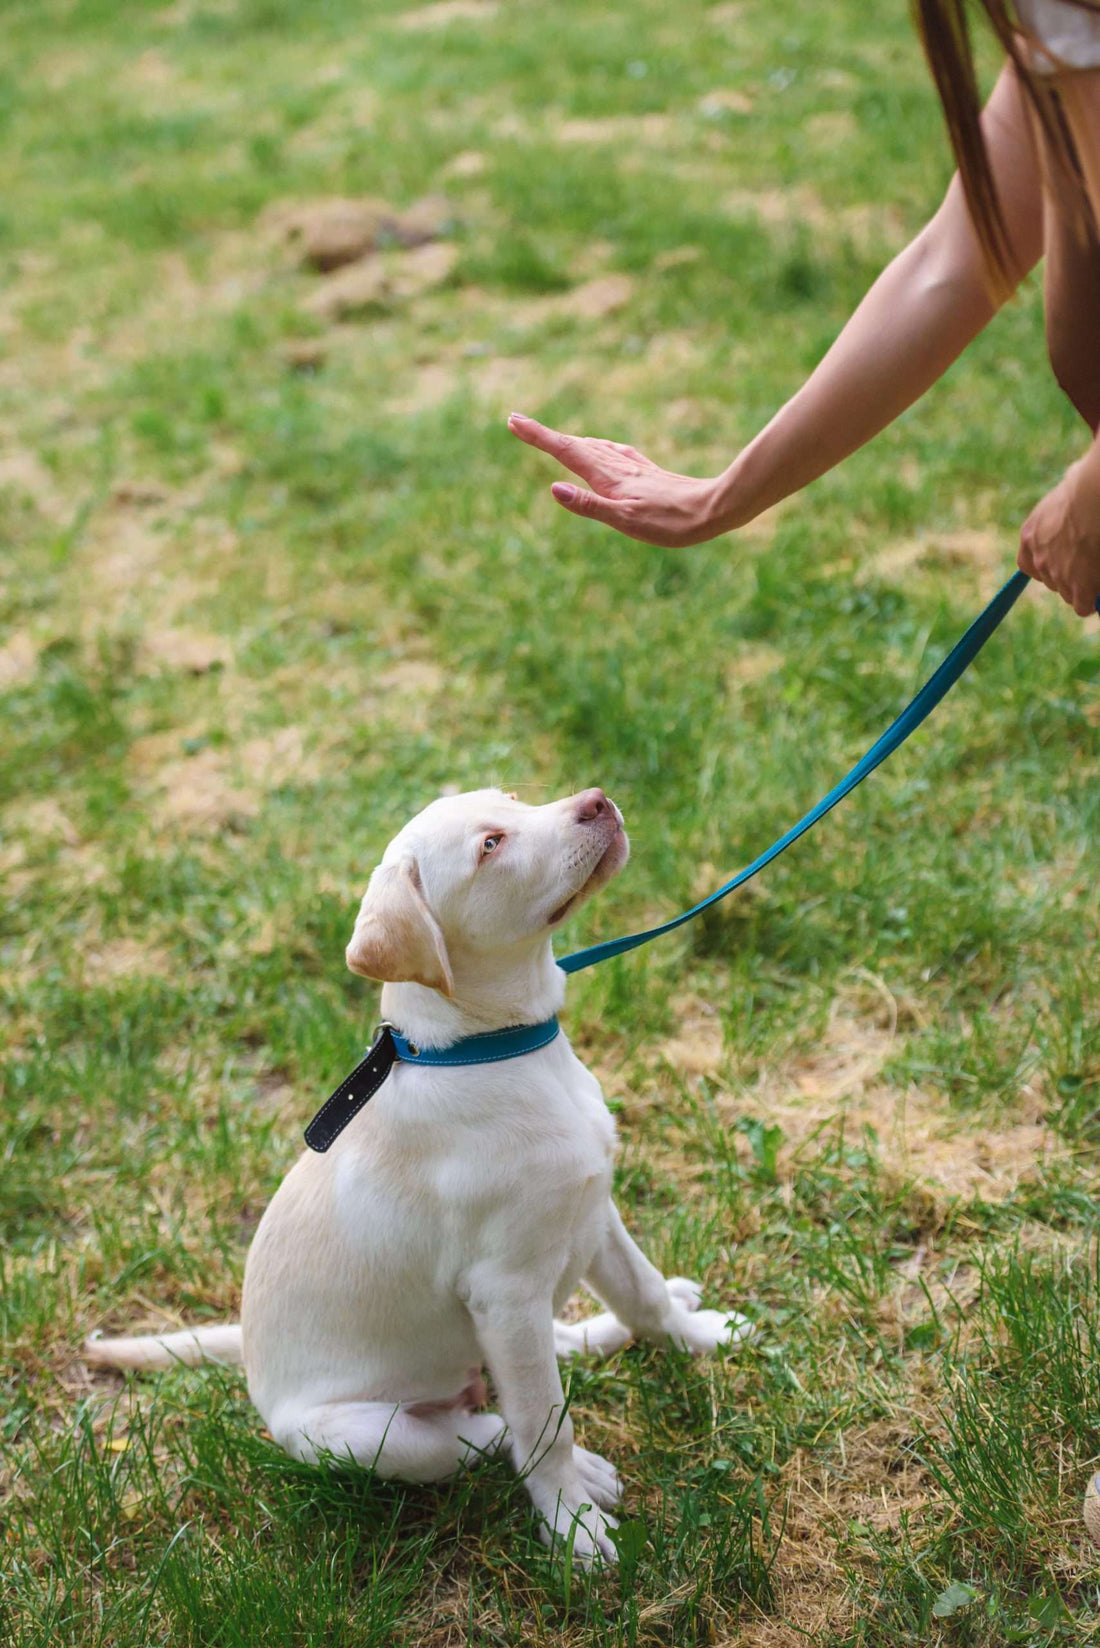 Teaching puppy to walk on leash